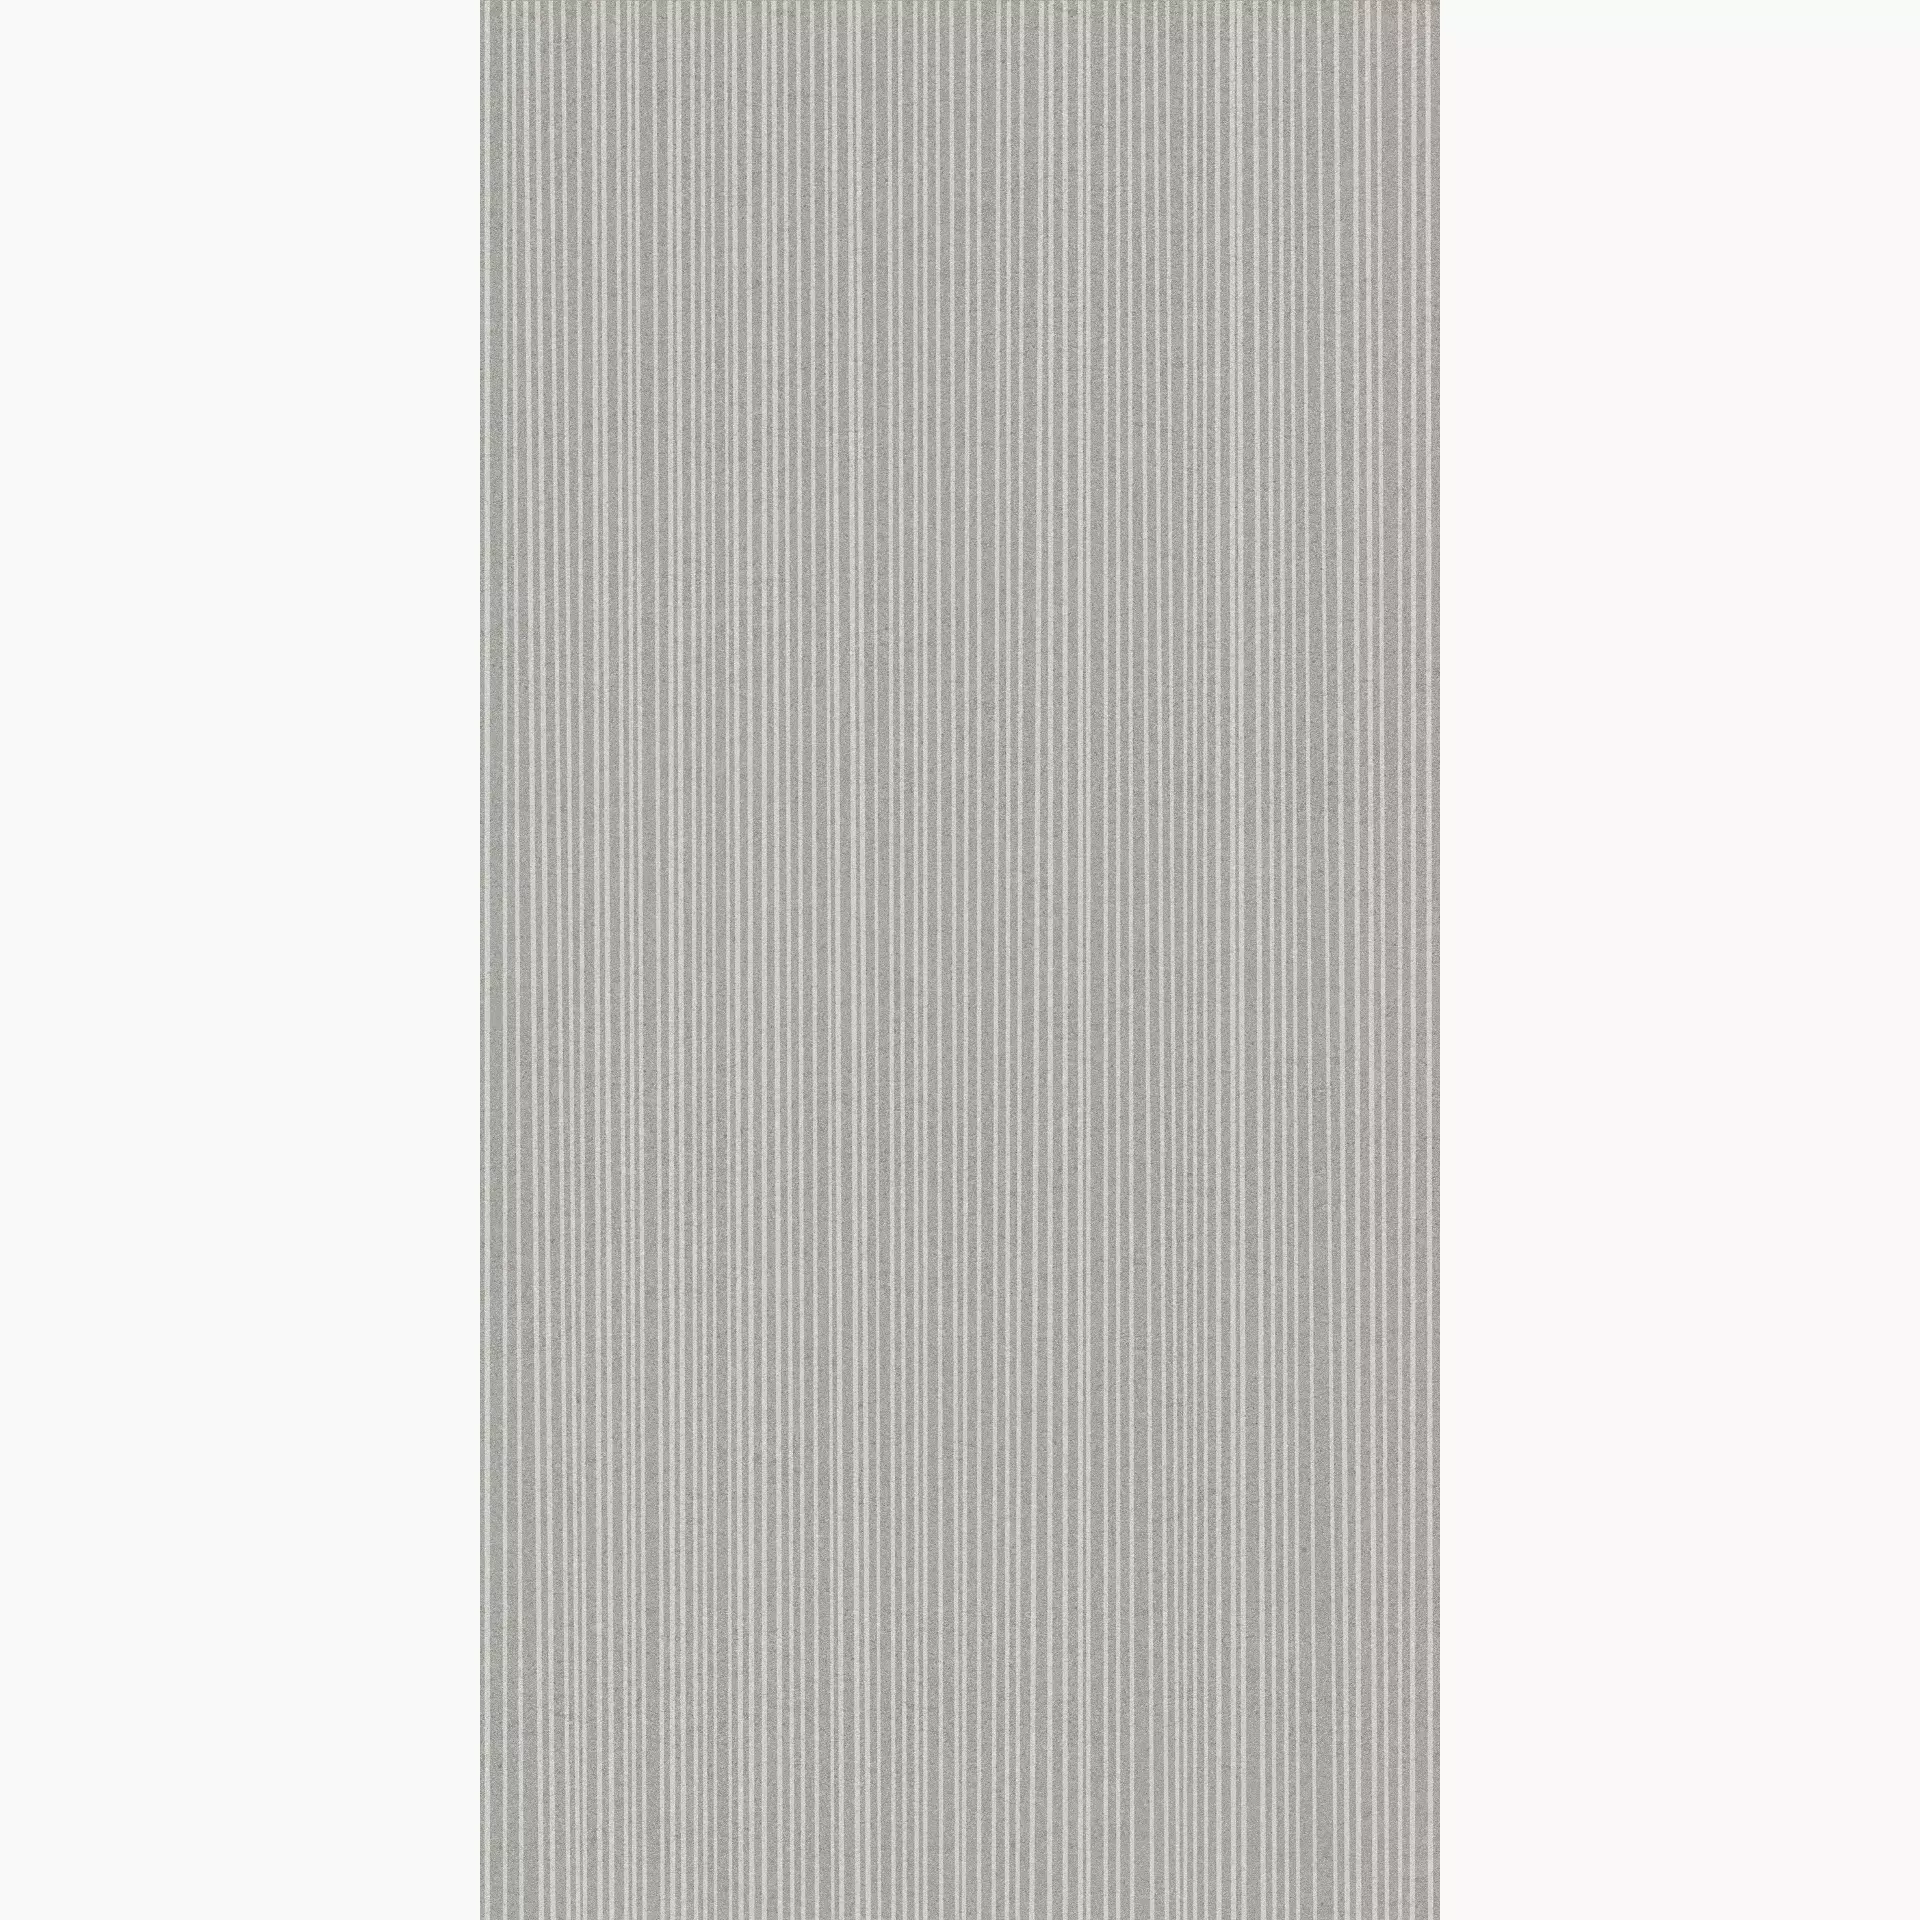 Coem Tweed Stone Grey Naturale Grey 0TW713R natur 75x149,7cm rektifiziert 10mm